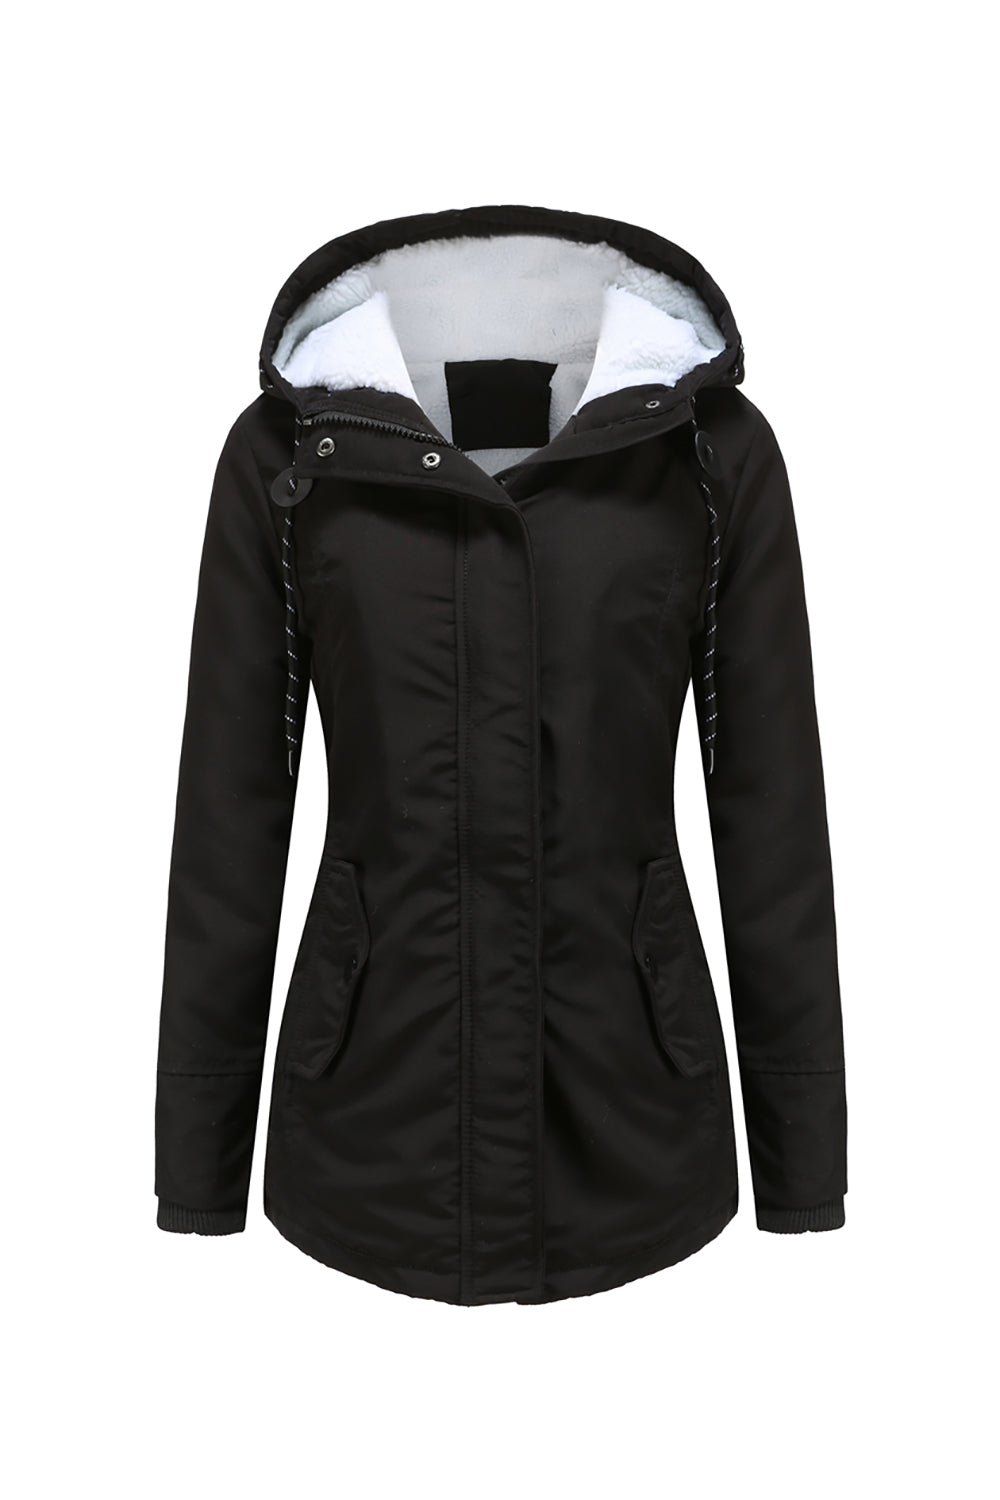 Winter Black Hooded Drawstring Zipper Thickened Padded Jacket